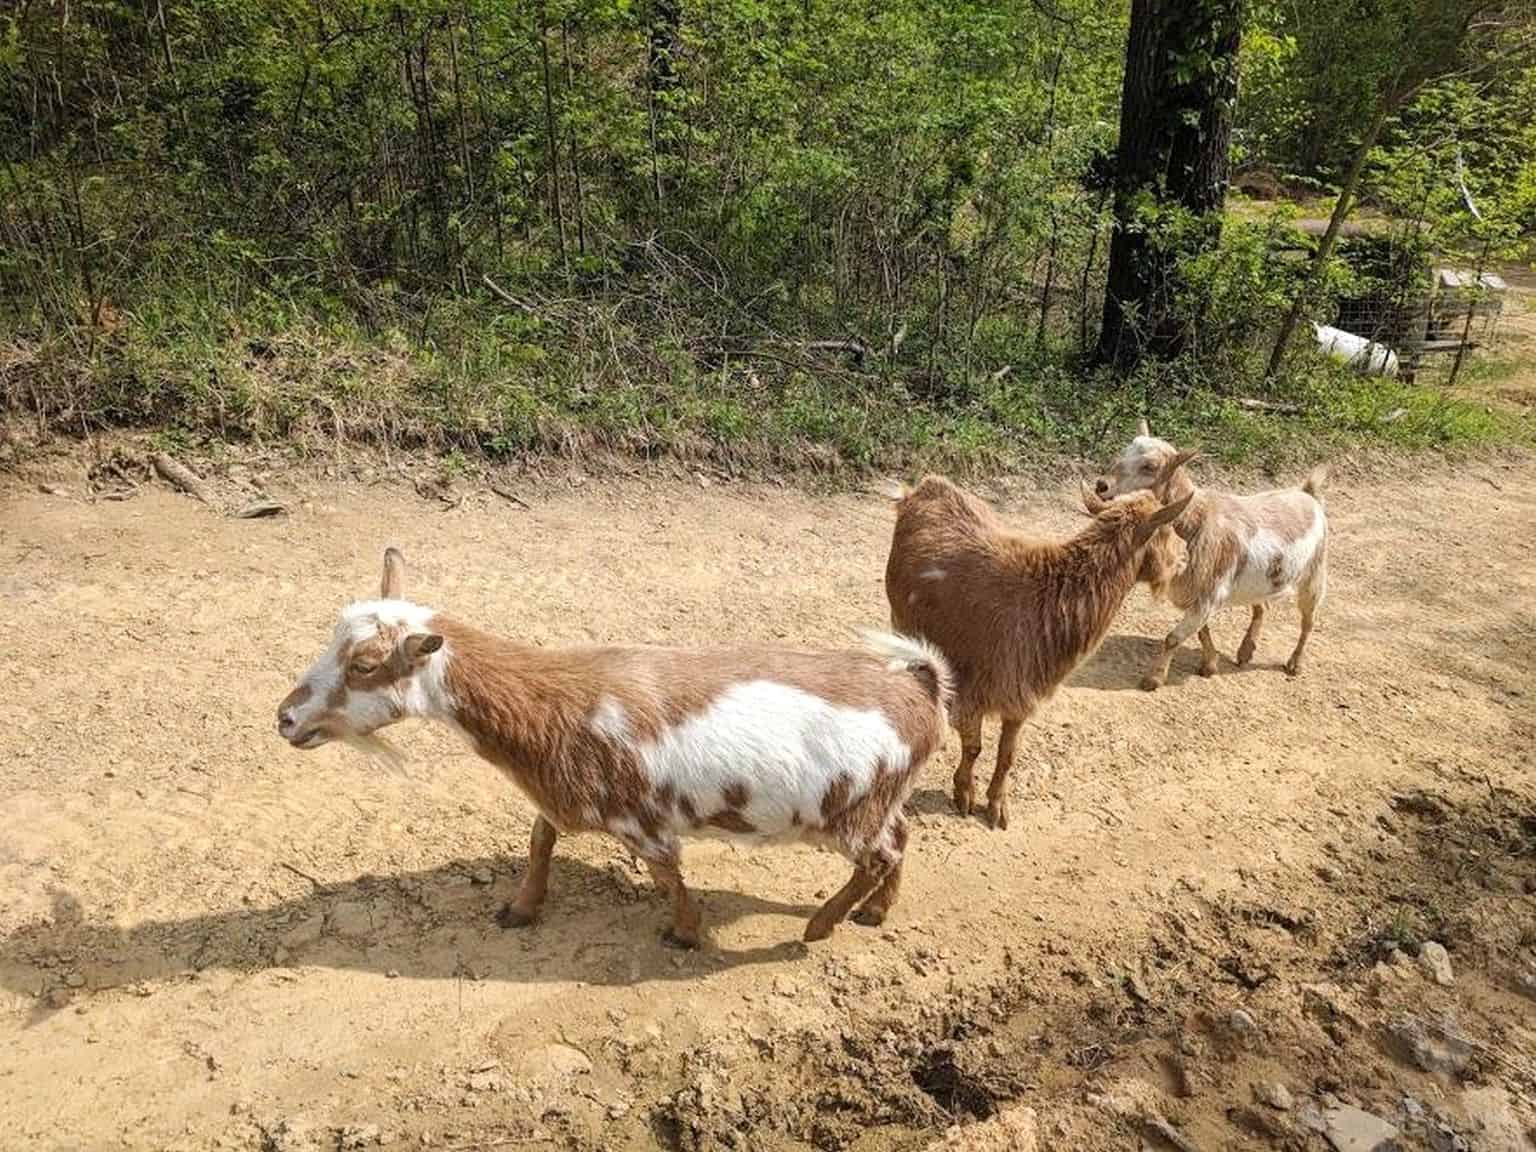 Nubian goats walking on dirt road